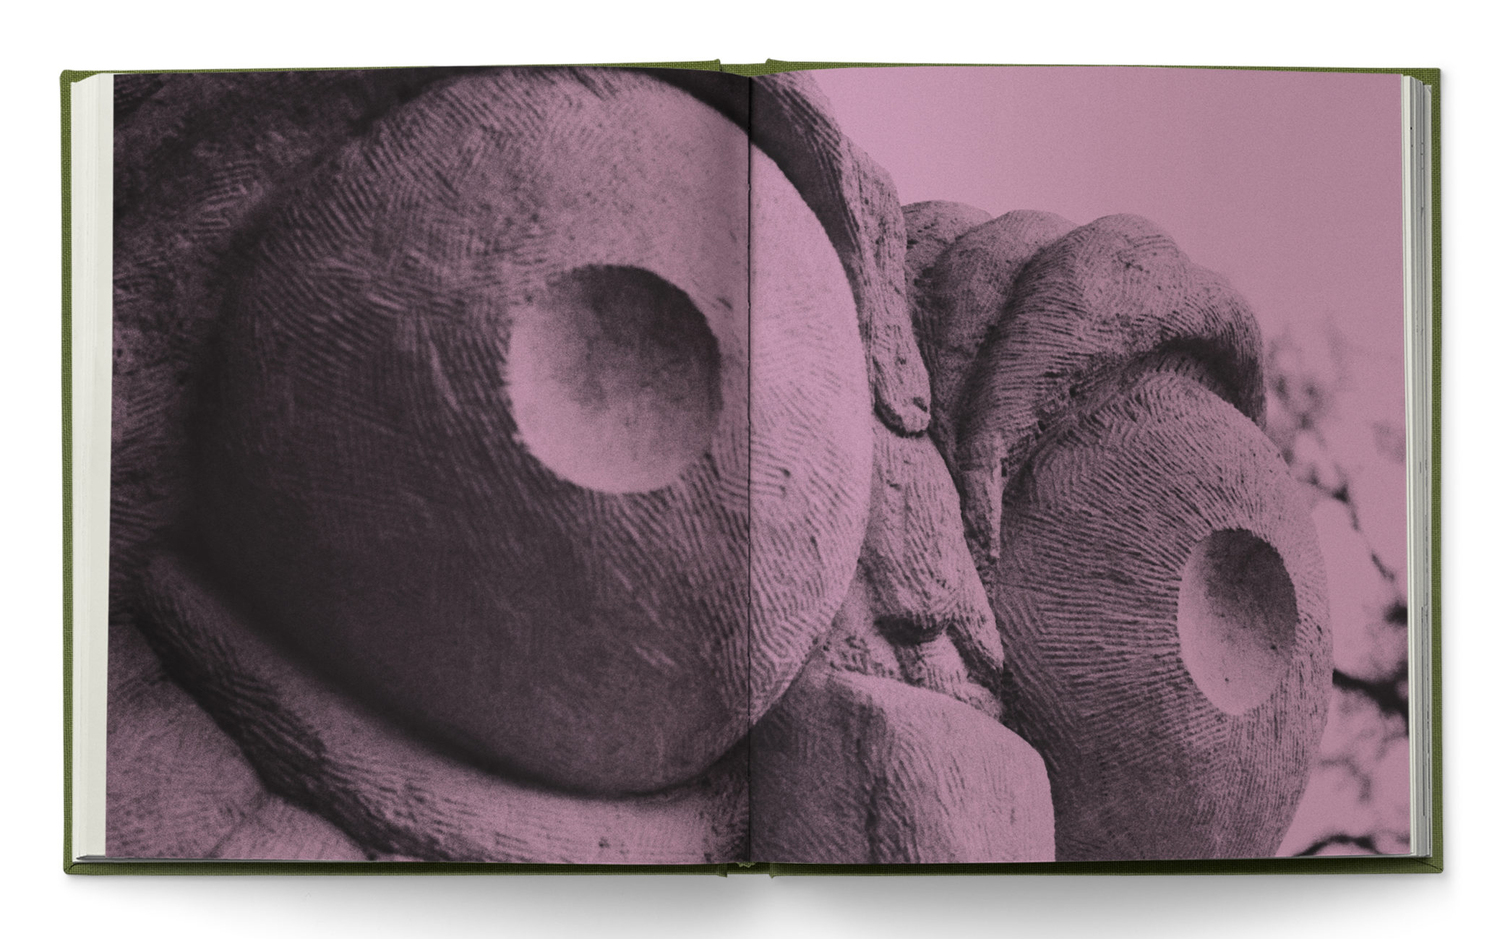 Stones. Gods. Humans. Animals. - Stefan Rinck